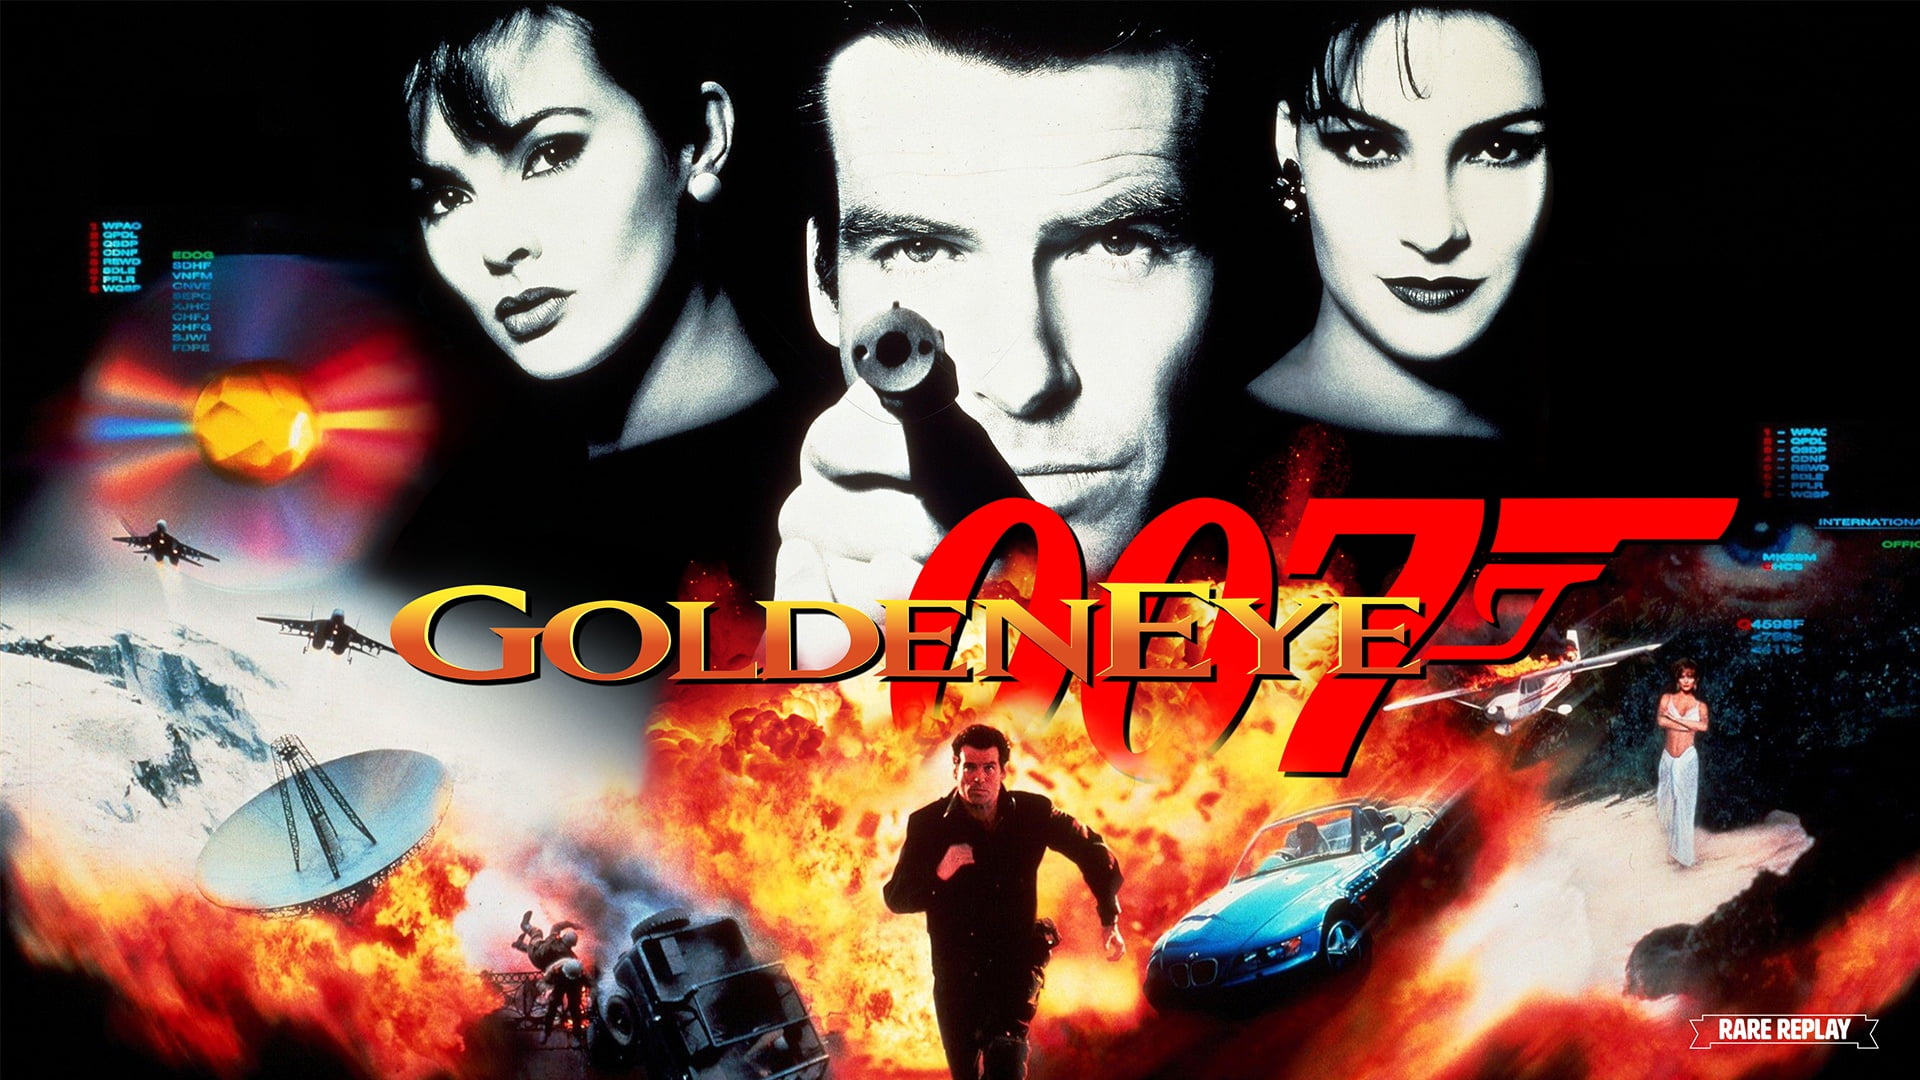 GoldenEye 007 HD Remake Cover Image